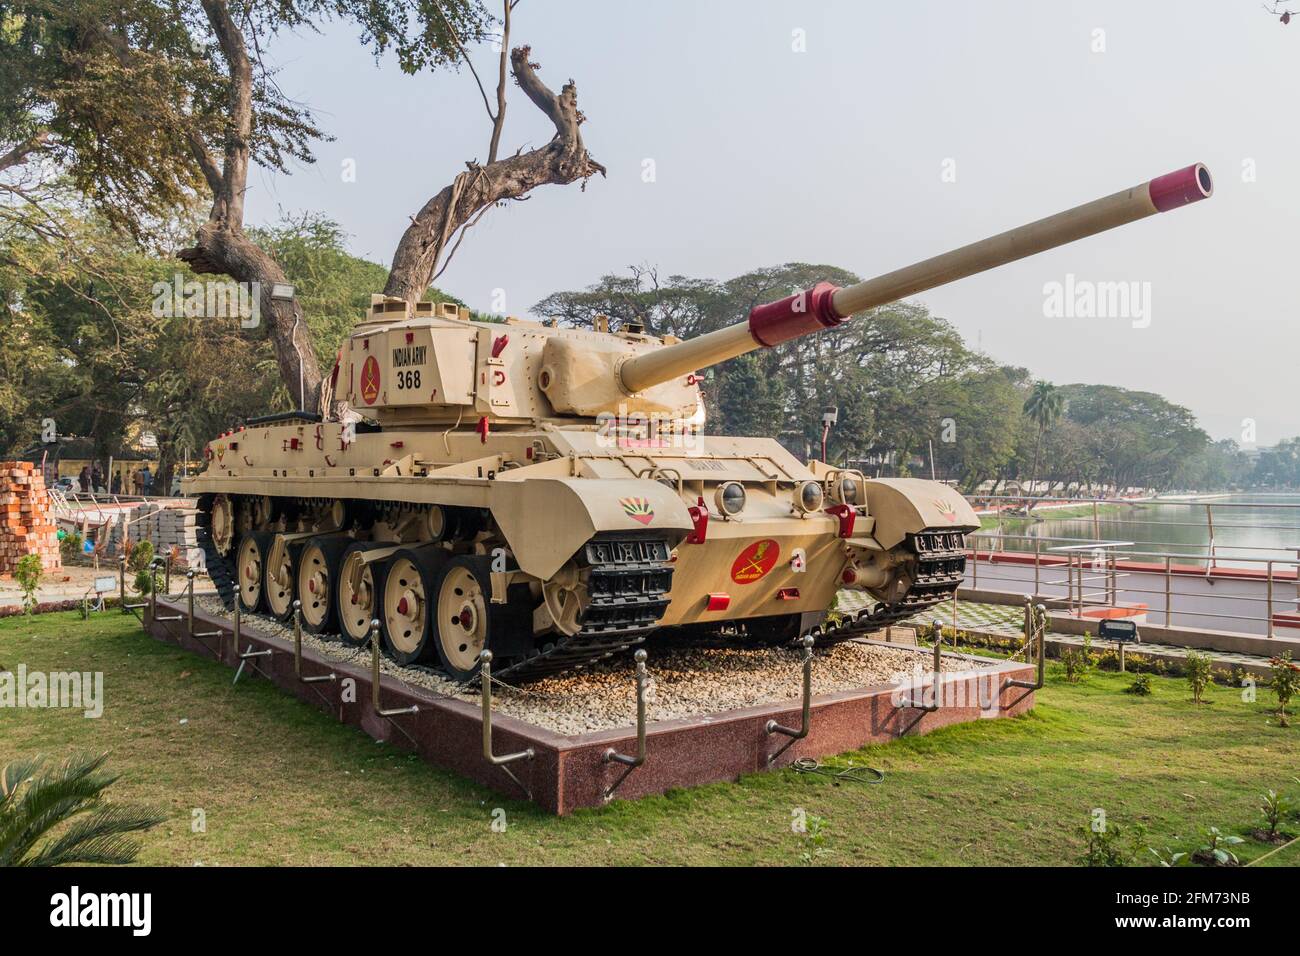 GUWAHATI, INDIA - JANUARY 31, 2017: Vijayanta main battle tank at Dighalipukhuri War Memorial in Guwahati, India Stock Photo